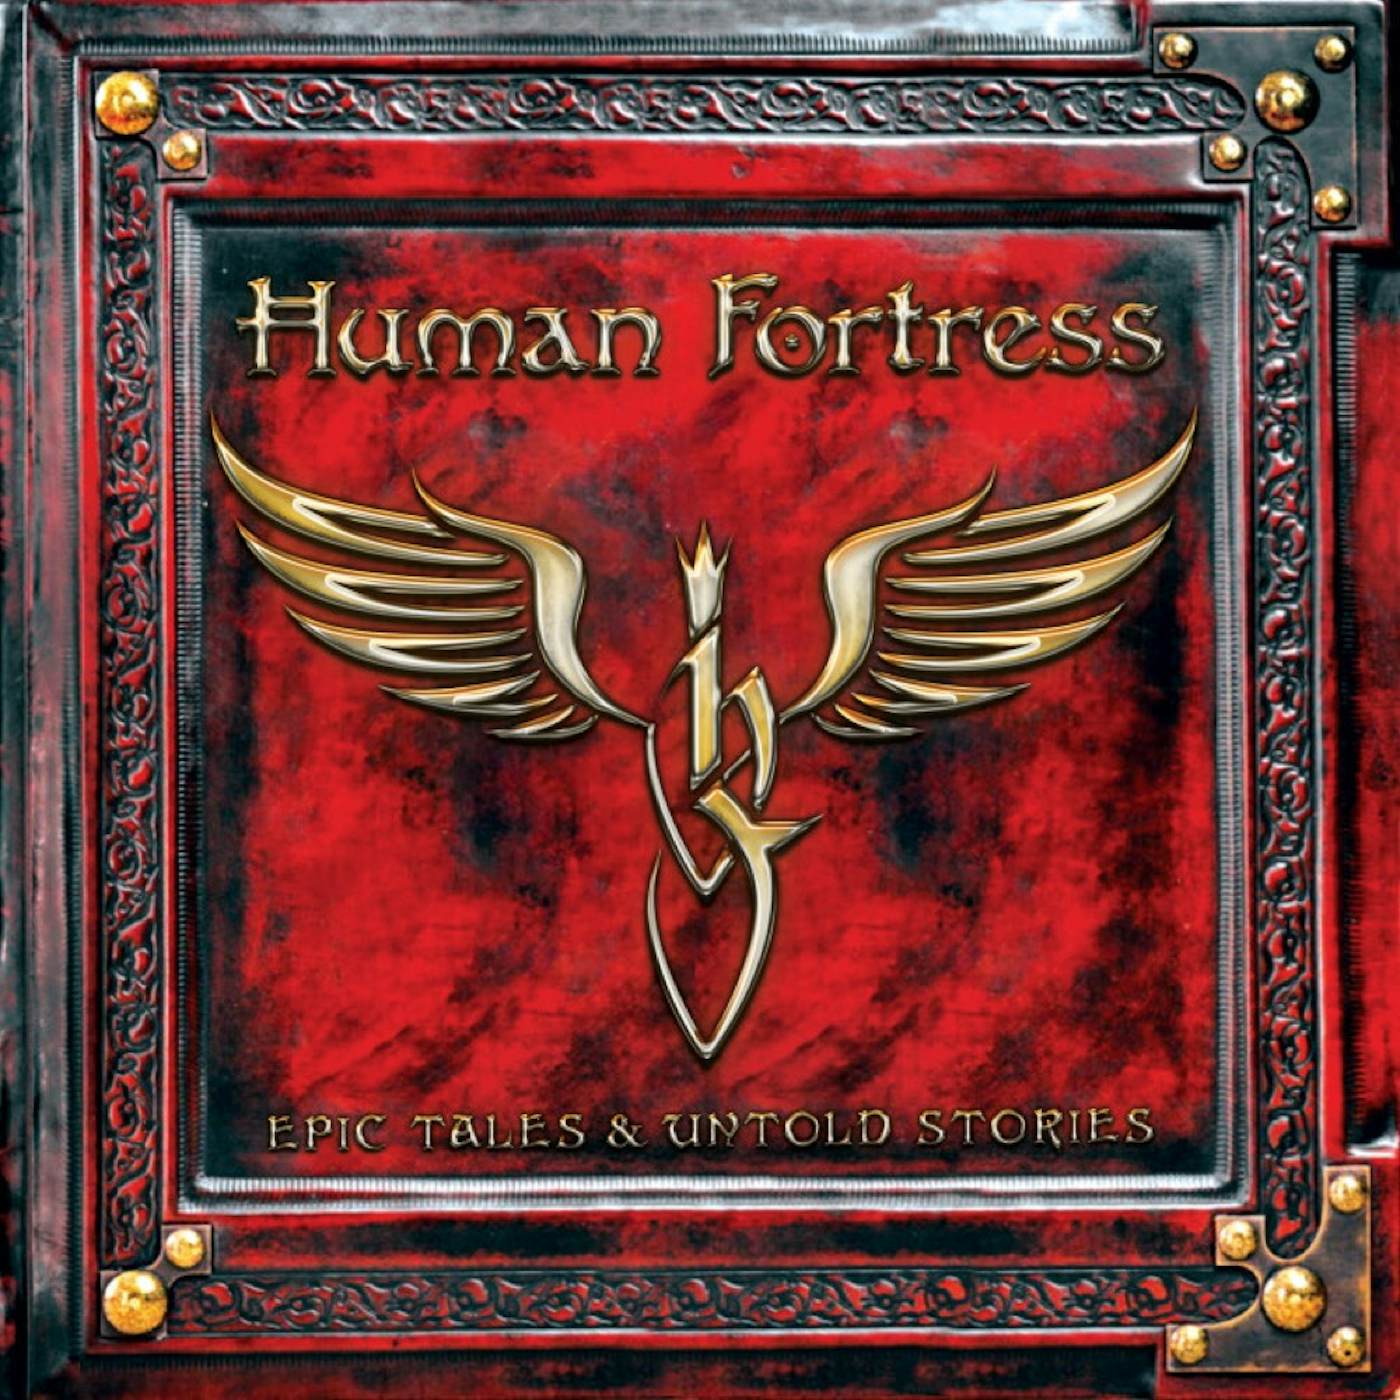 Human Fortress Epic Tales & Untold Stories Vinyl Record